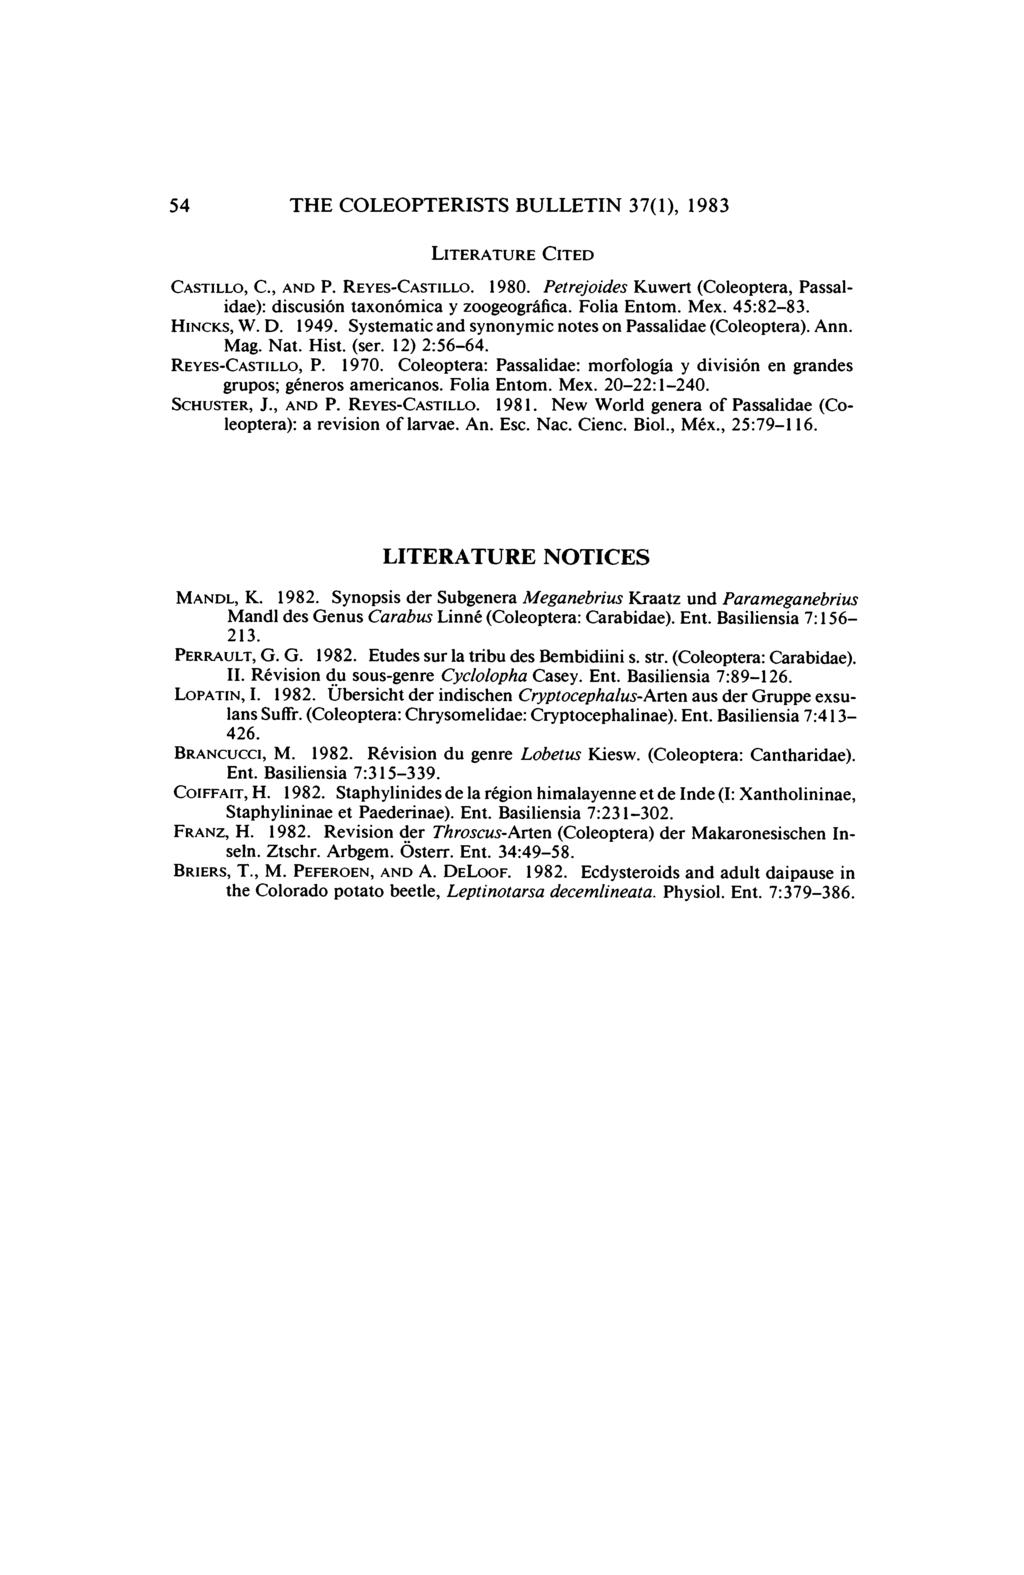 54 THE COLEOPTERISTS BULLETIN 37(1), 1983 LITERATURE CITED CASTILLO, C., AND P. REYES-CASTILLO. 1980. Petrejoides Kuwert (Coleoptera, Passalidae): discusi6n taxon6mica y zoogeografica. Folia Entom.